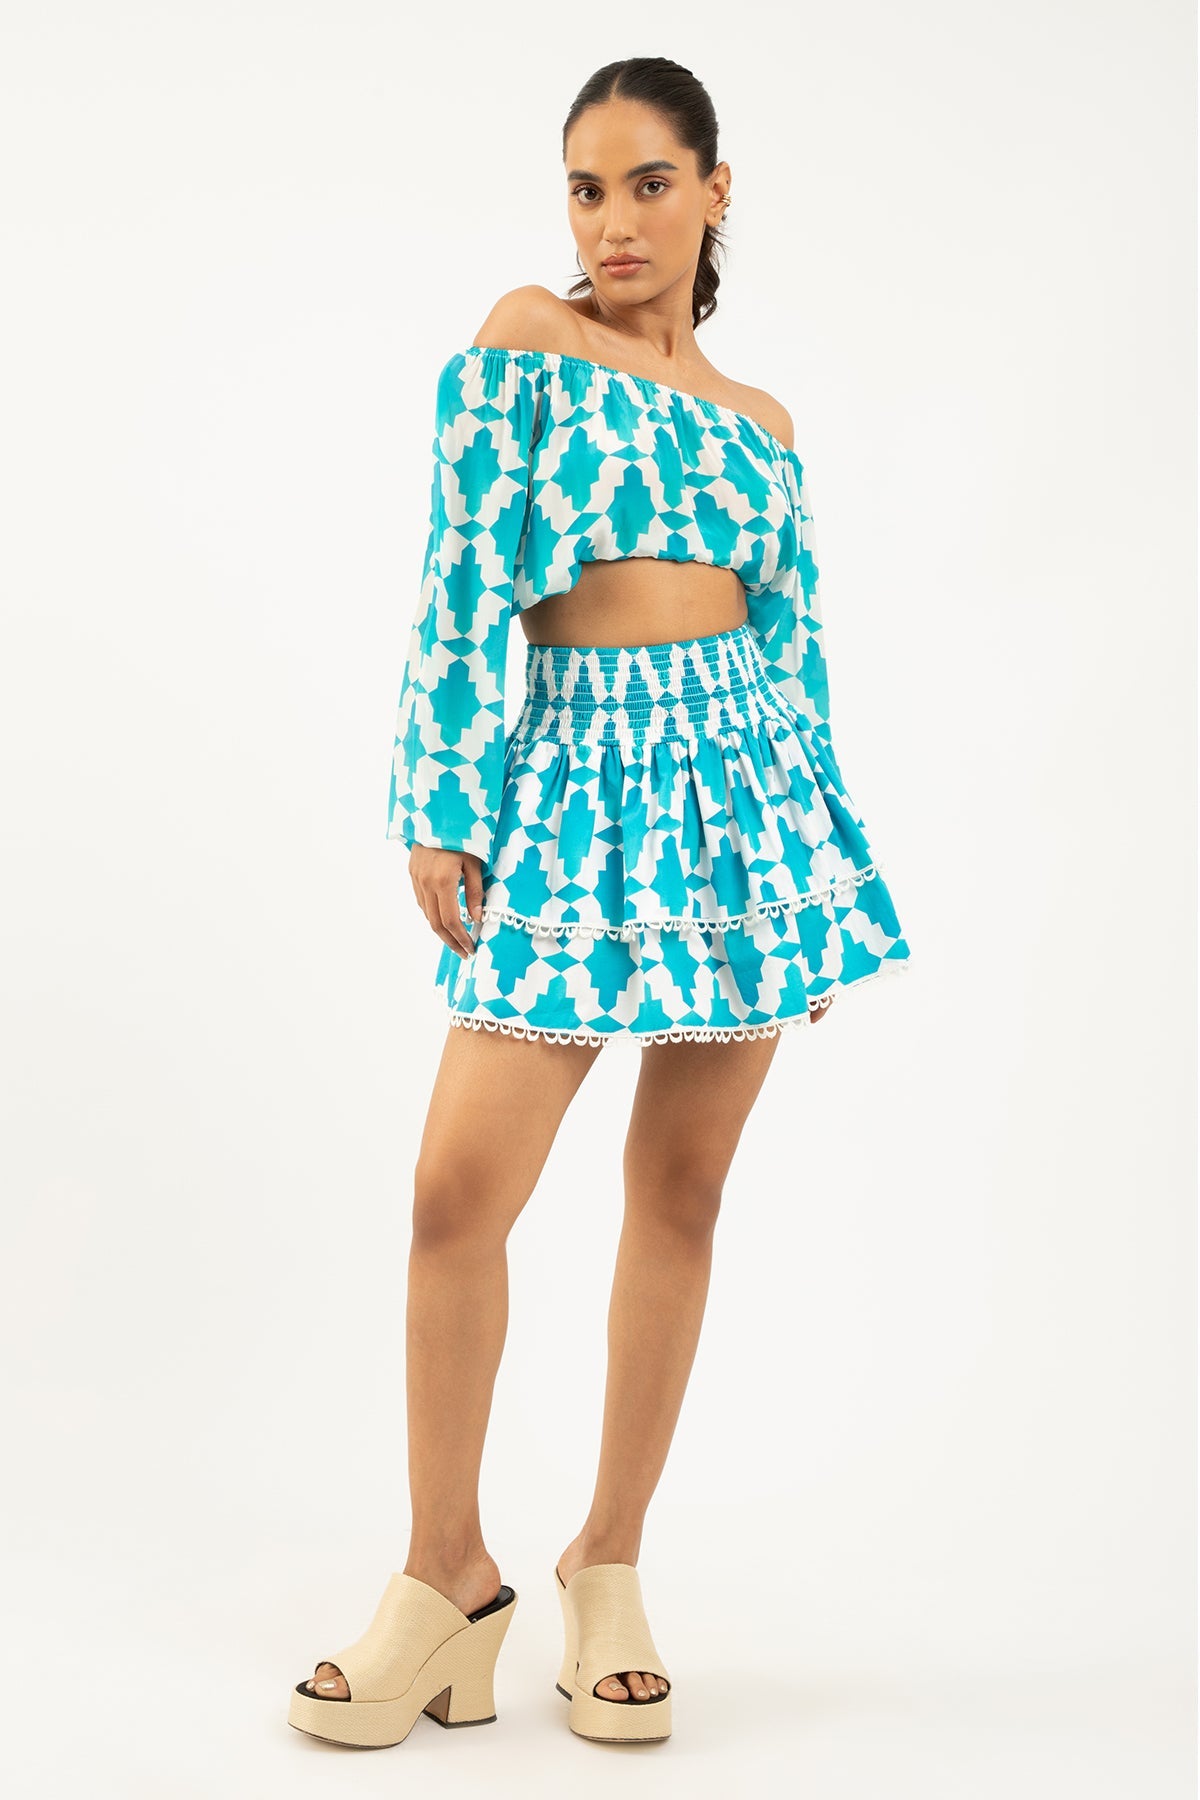 Paulina Skirt Turquoise - Premium Short skirt from Marina St Barth - Just $350! Shop now at Marina St Barth